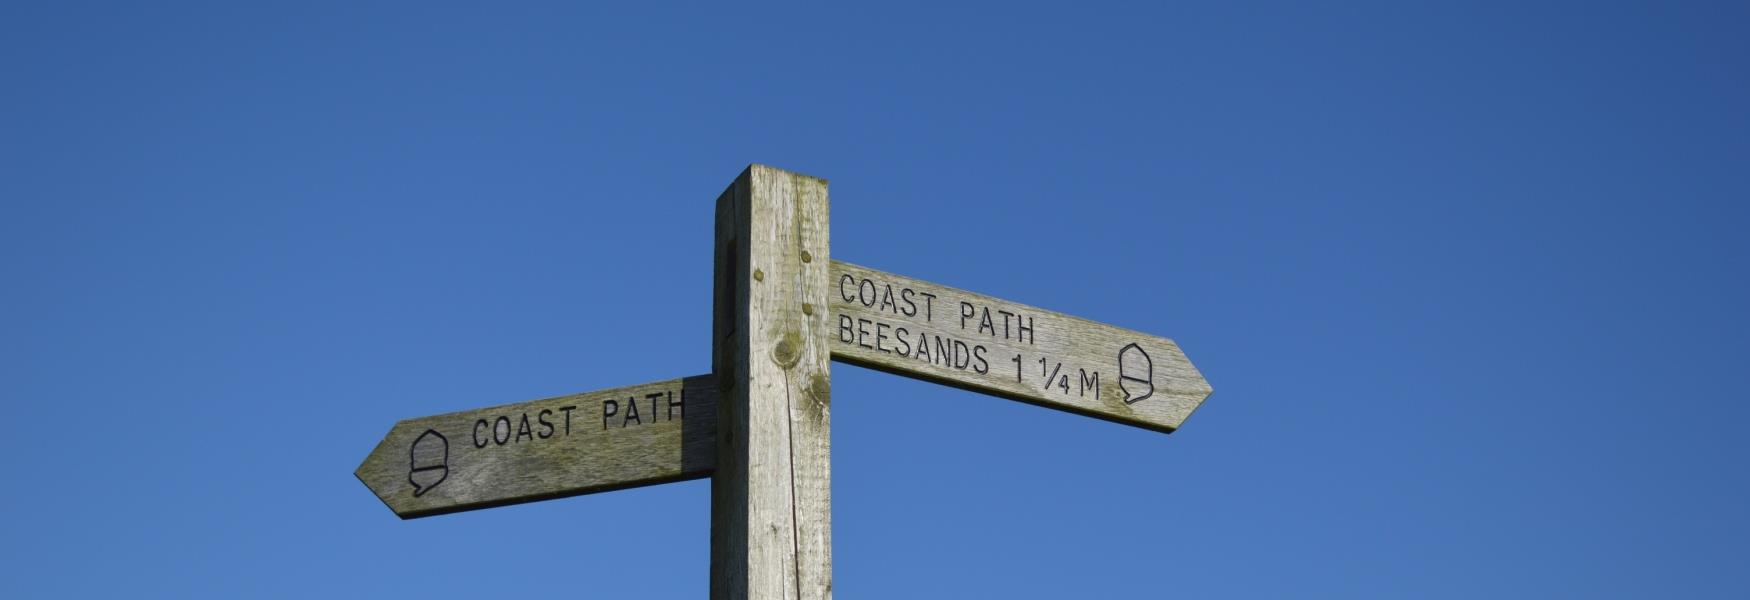 Beesands Coastal Path Sign